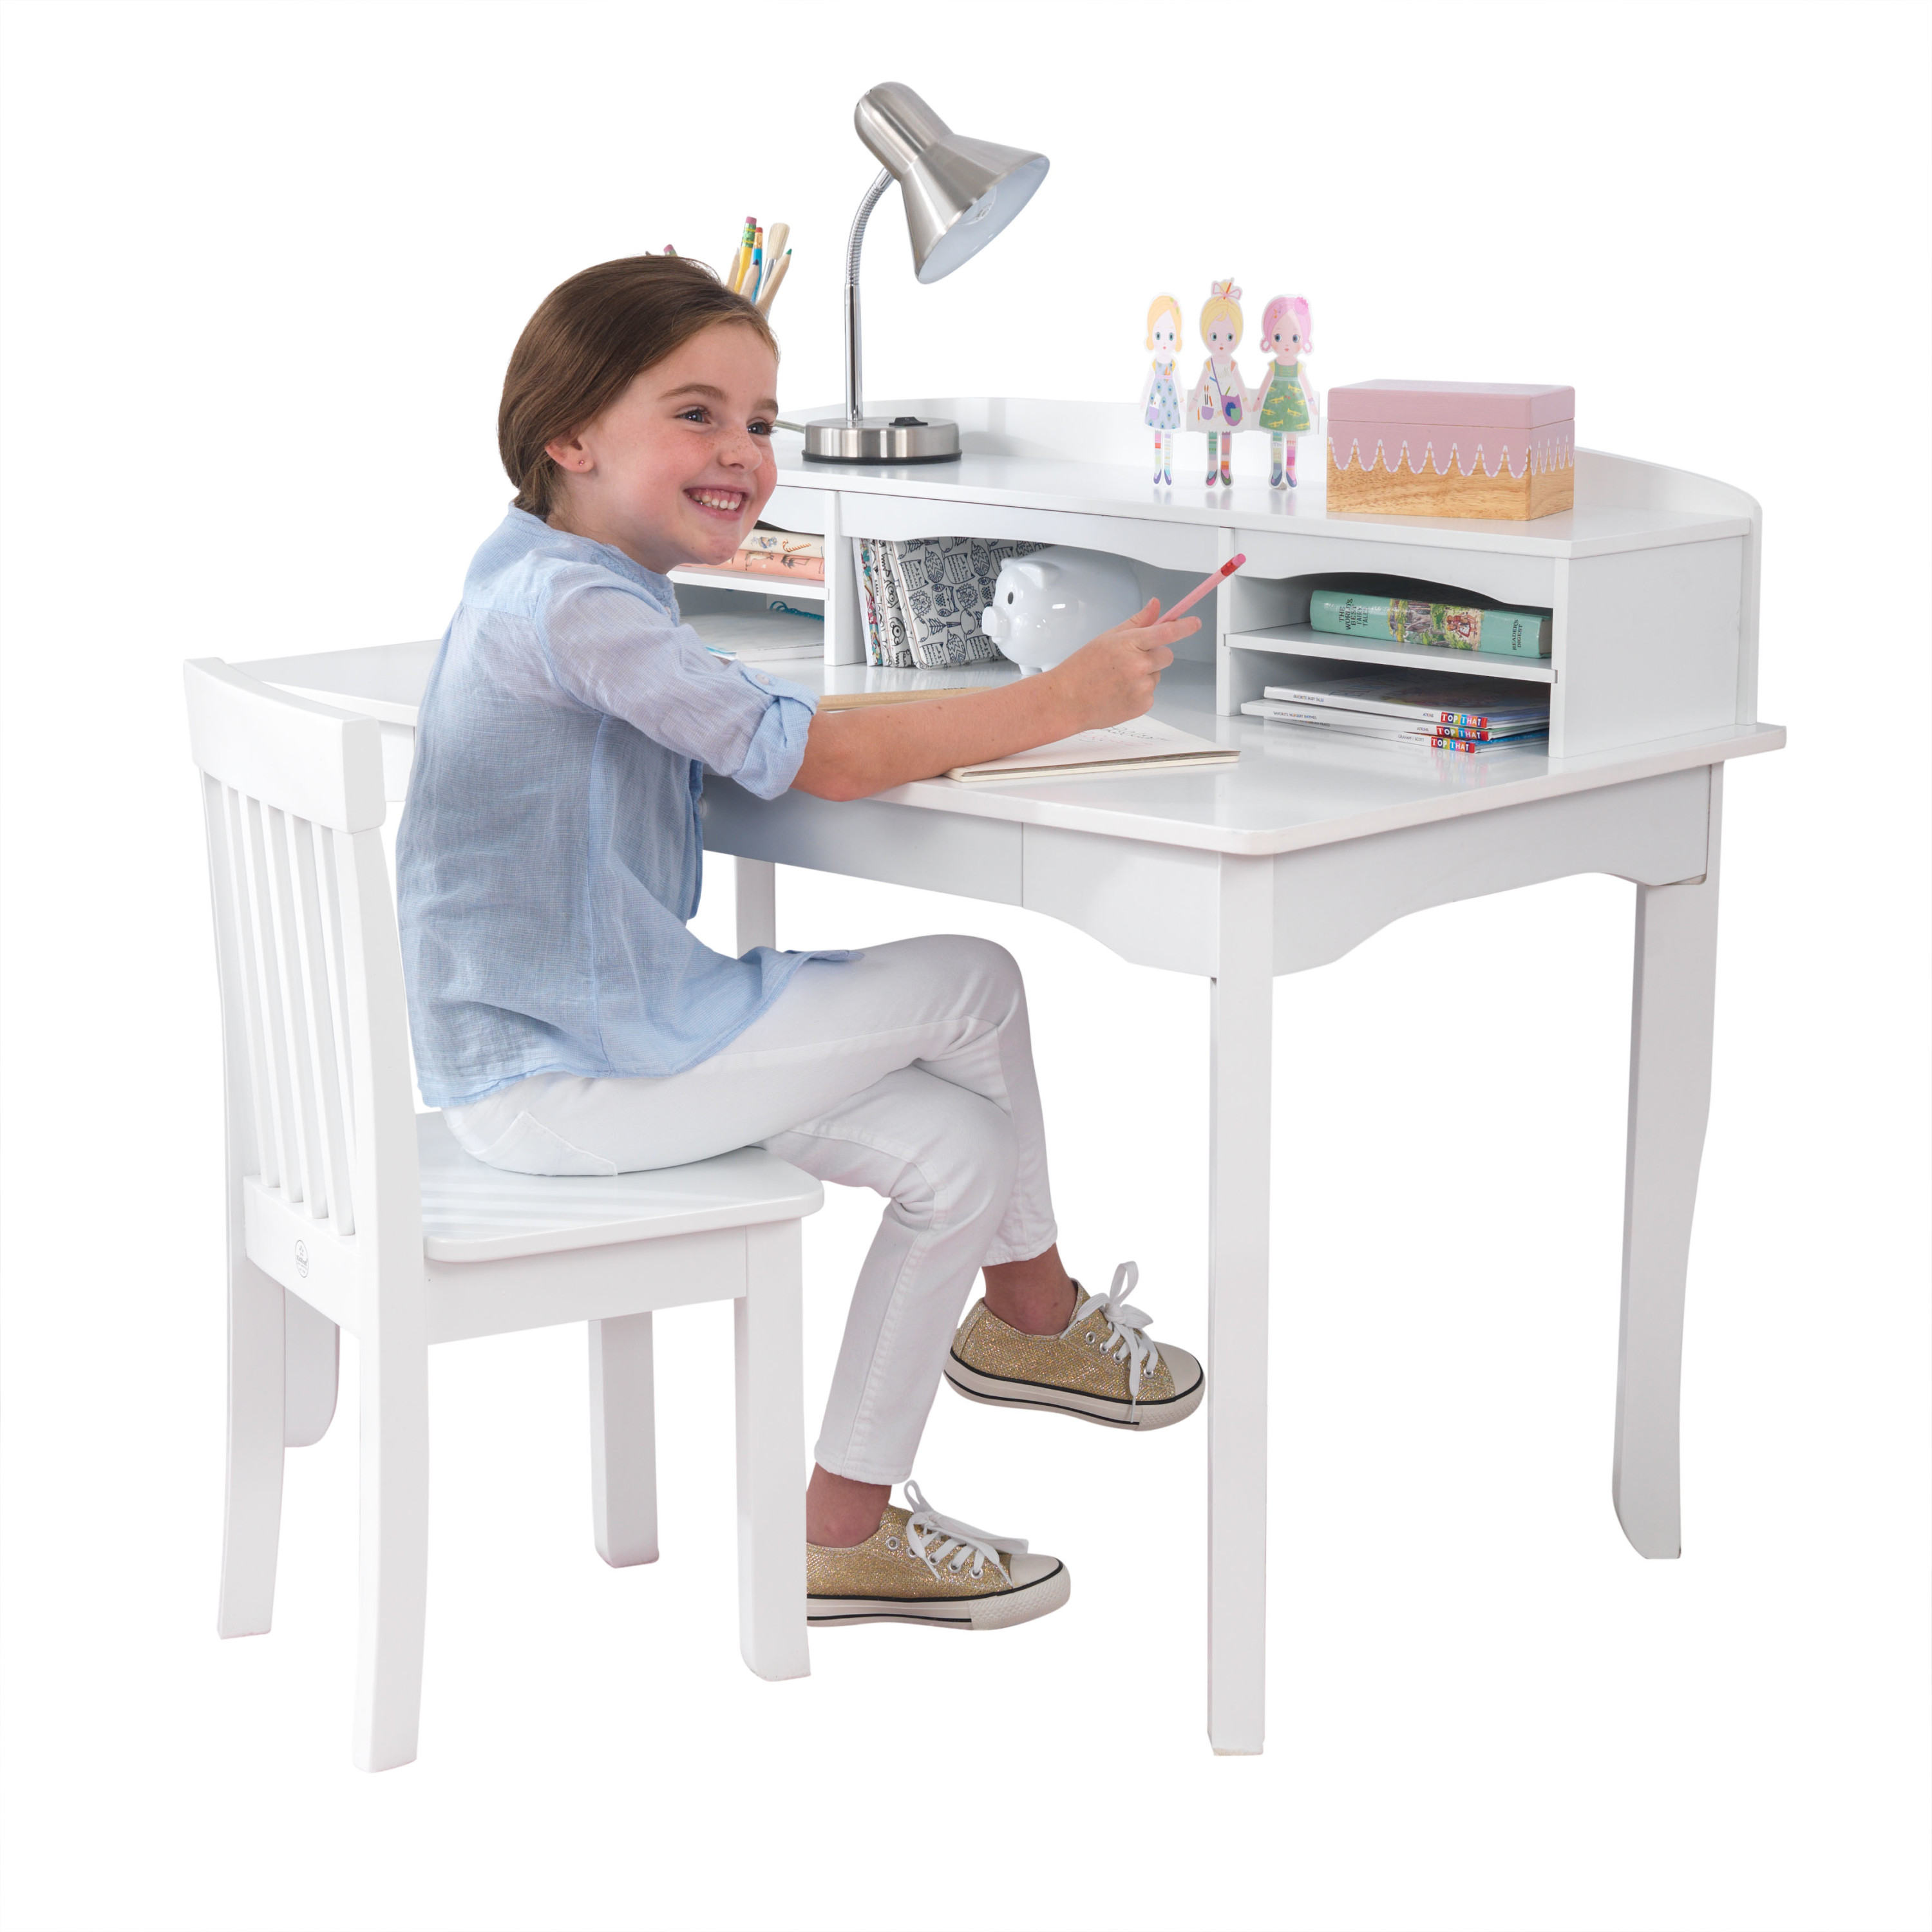 KidKraft KidKraft Avalon Wooden Children's Desk with Hutch, Chair and Storage - White - image 1 of 9